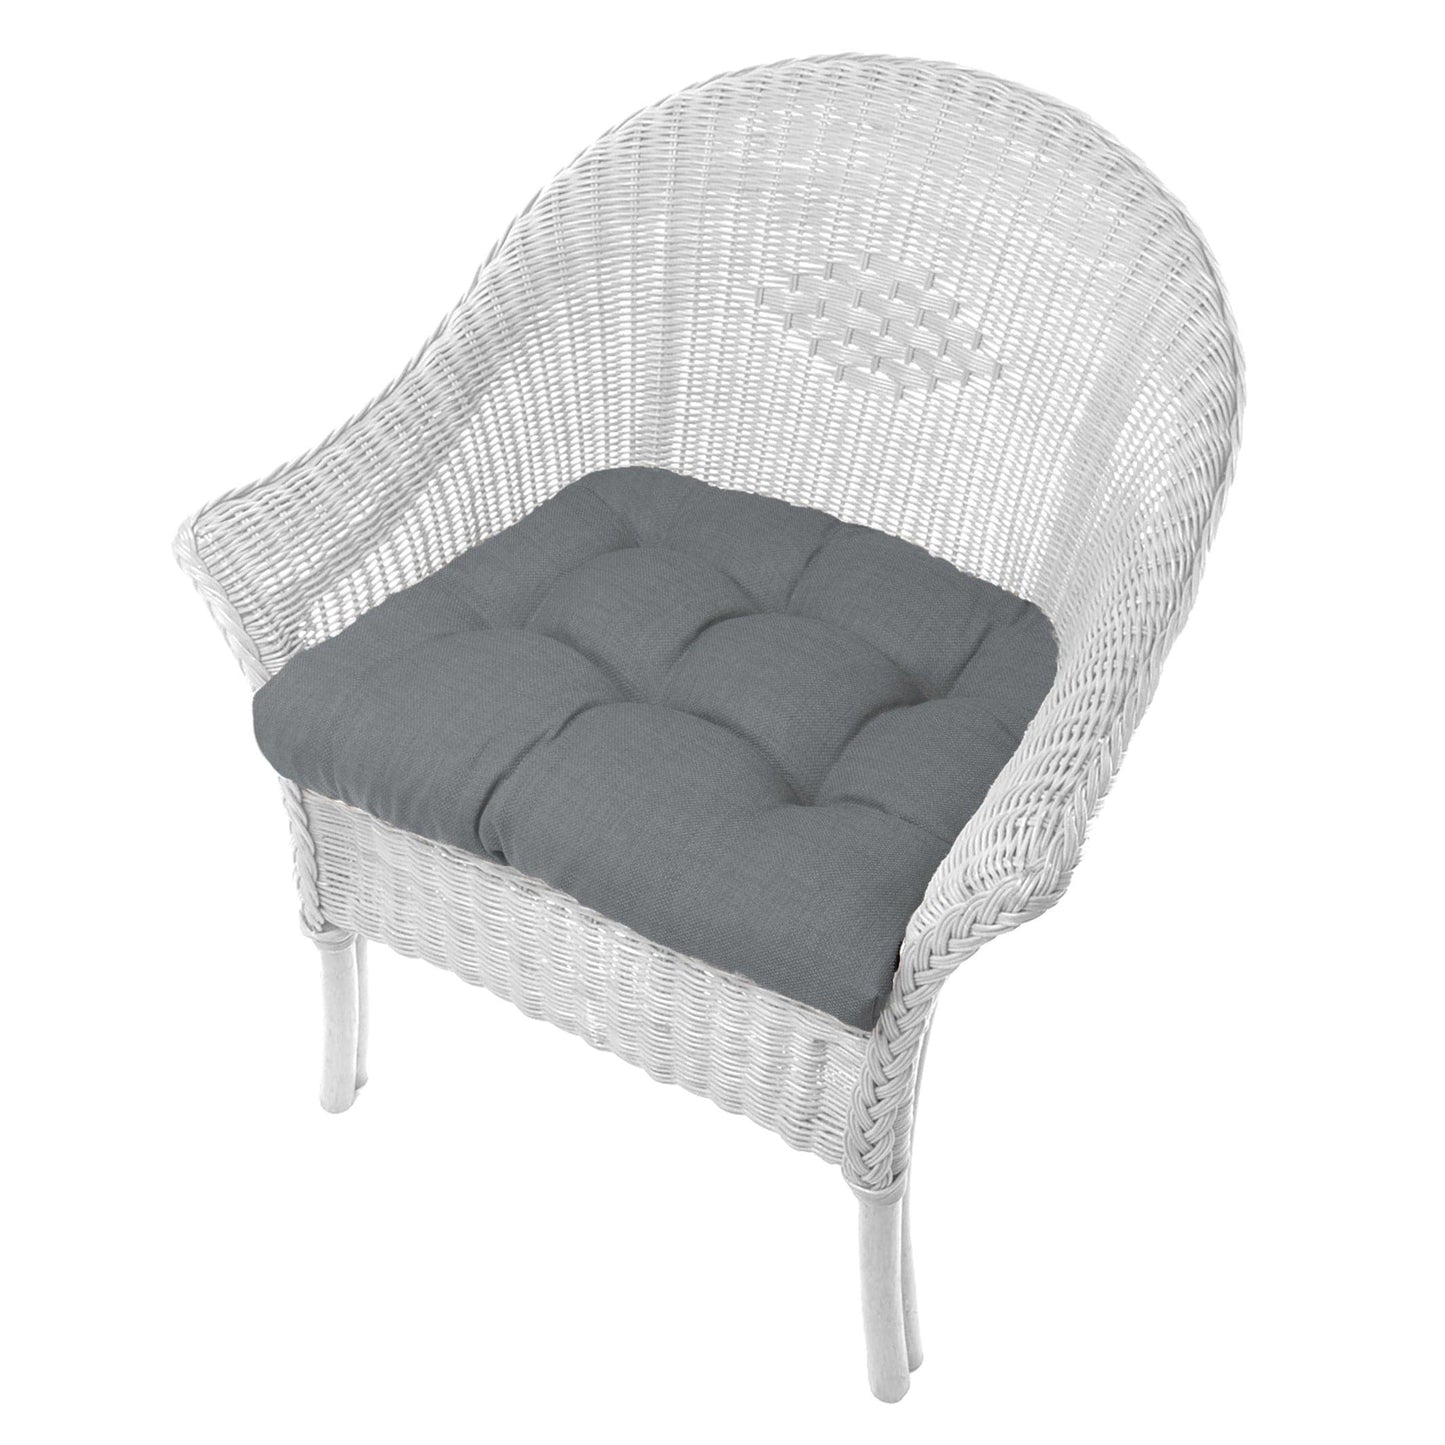 Rave Grey Patio Chair Cushions - Wicker Chair Cushions - Adirondack Chair Cushions | Smoke | Steel